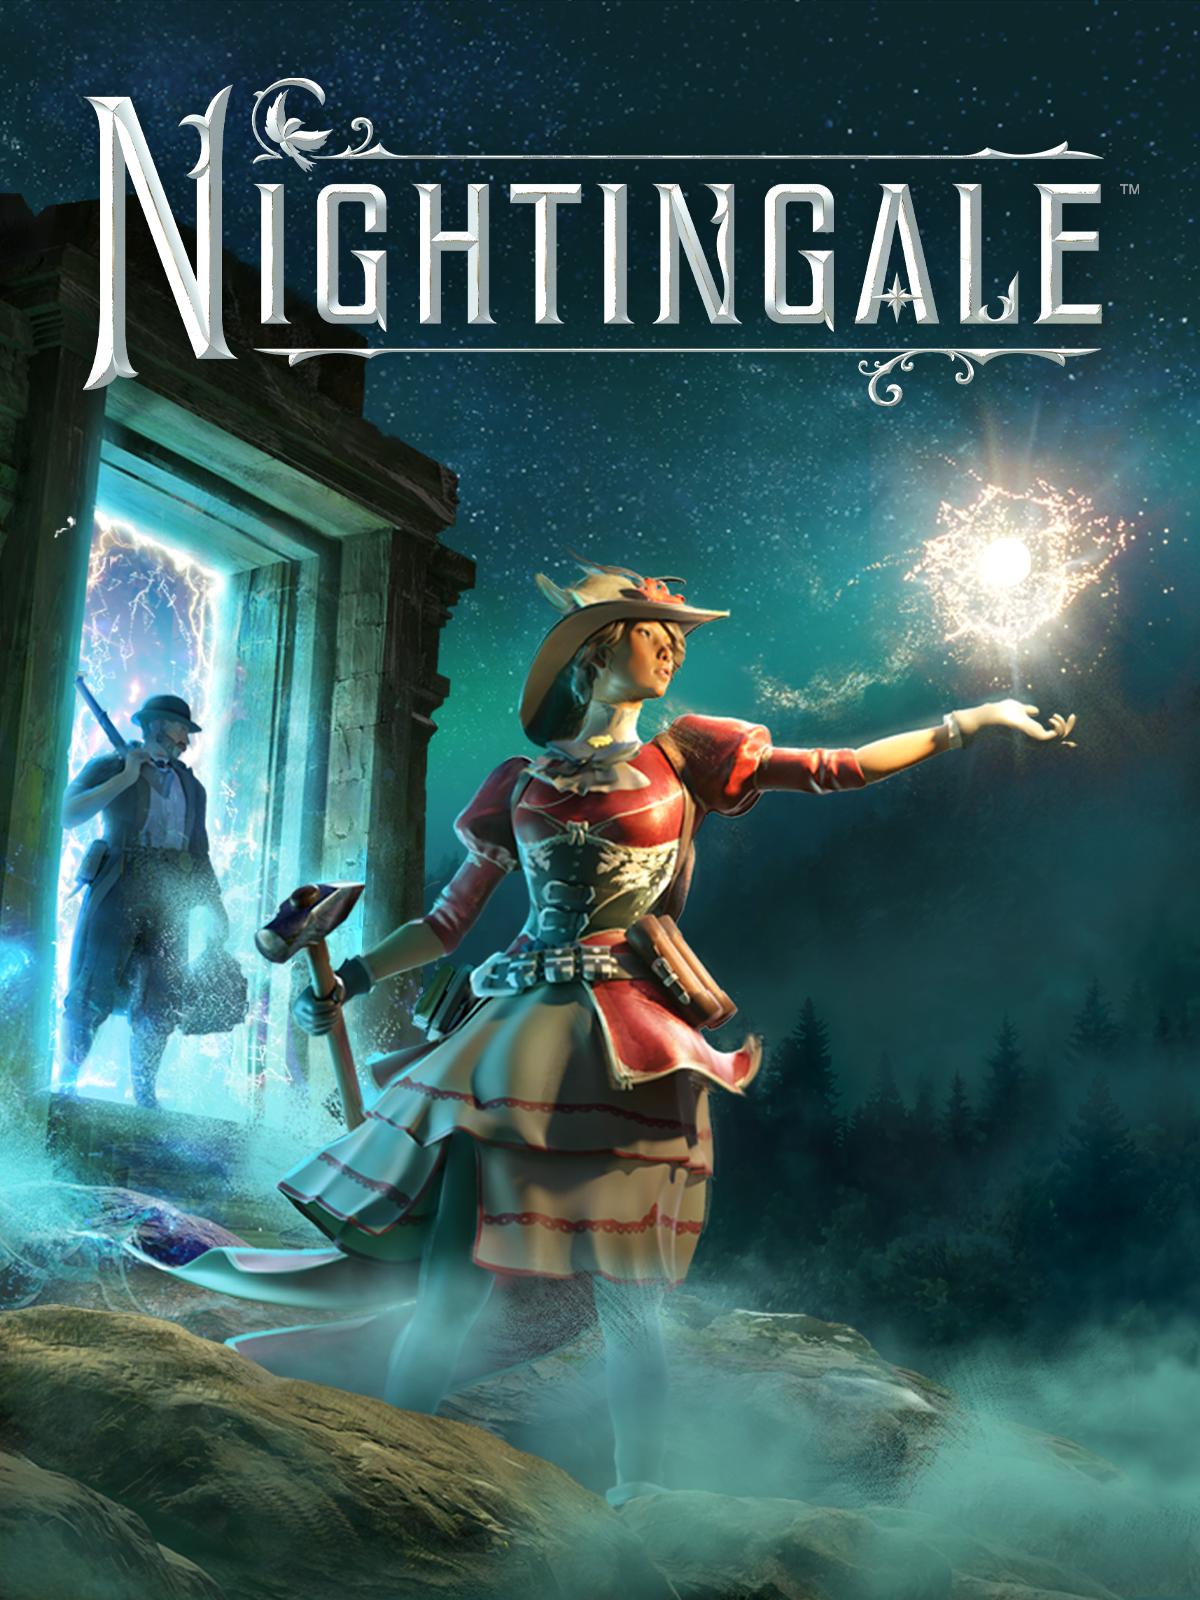 Nightingale игра купить